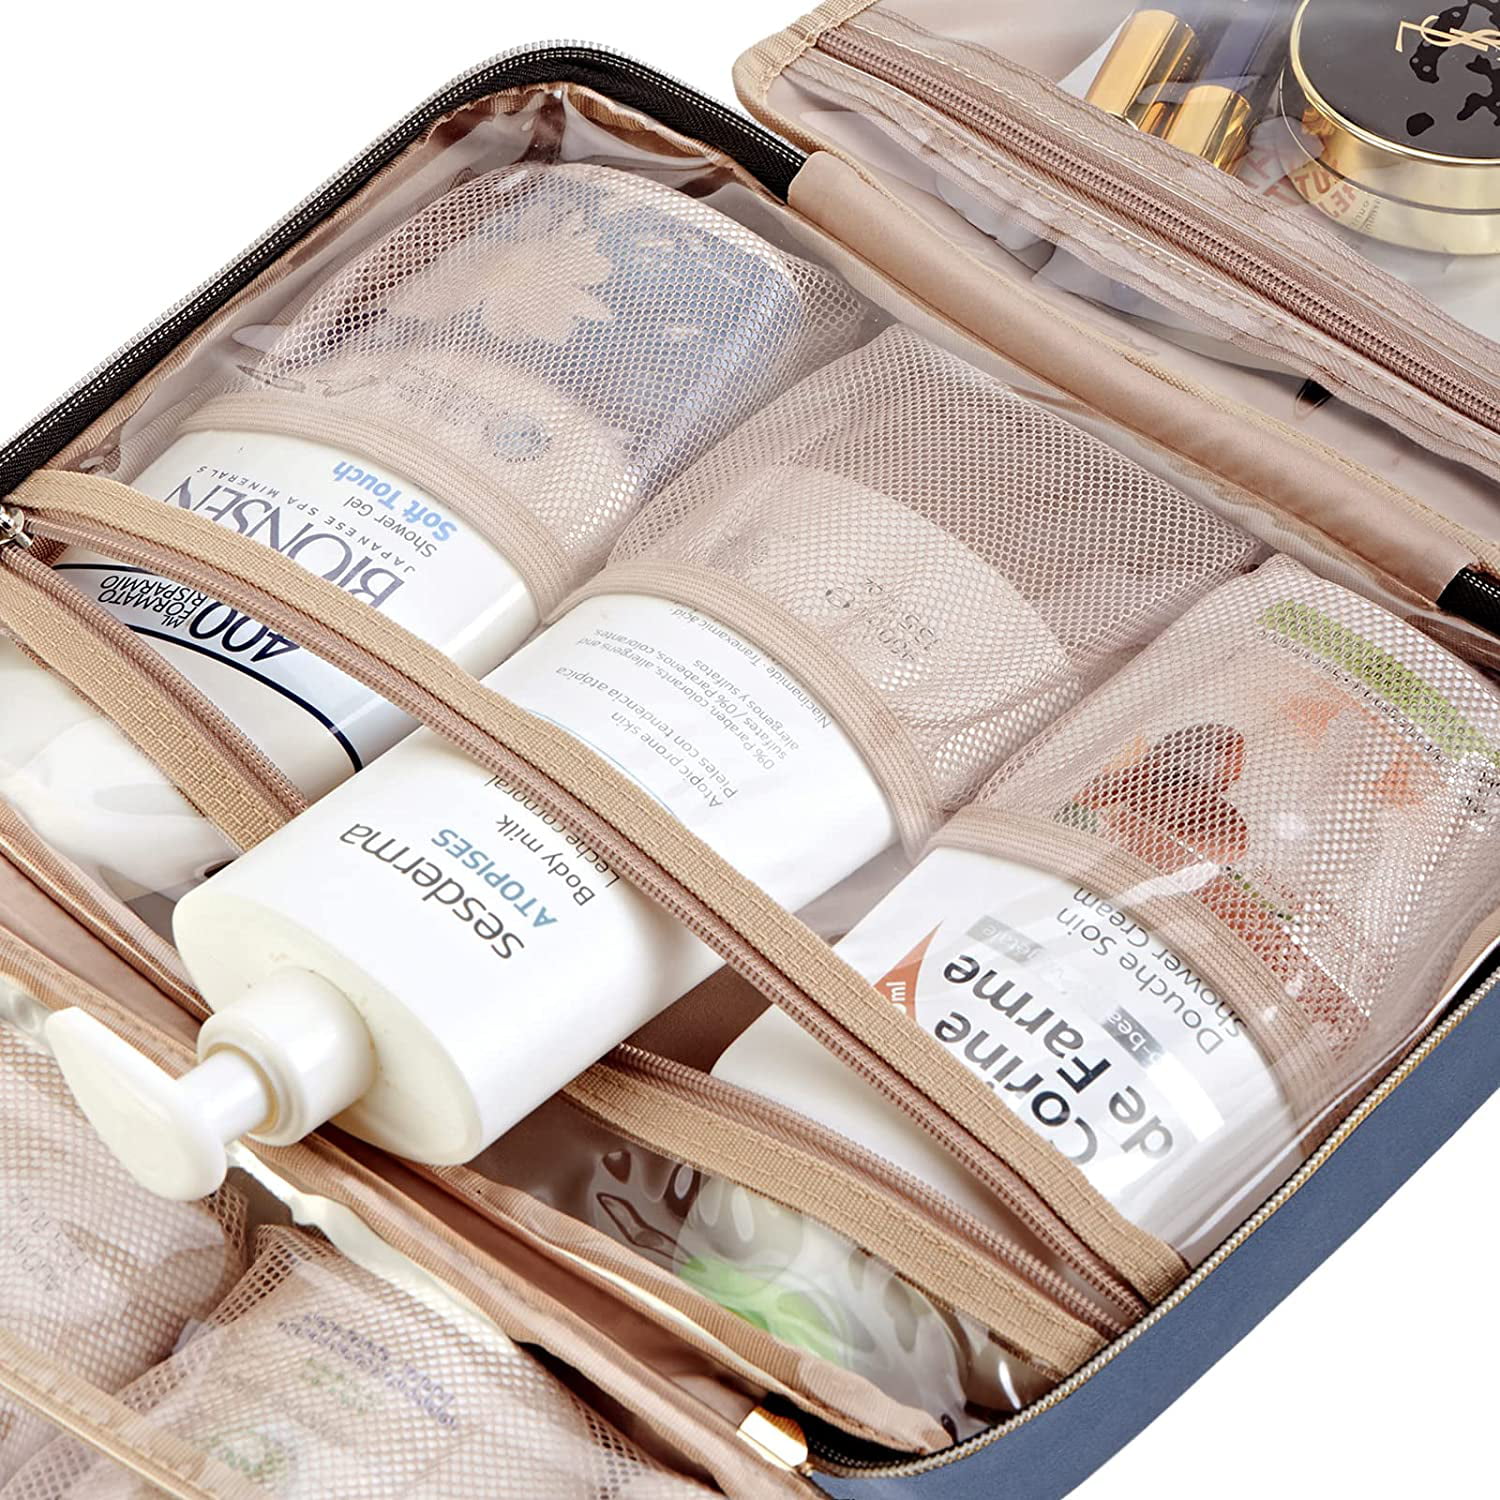 Toiletry Bag Kit Set: Hanging Travel Toiletry Bag + 311 TSA Cosmetic Liquid  Bag + Ultralight Accessory Organizer Pouch (Dusty Teal)